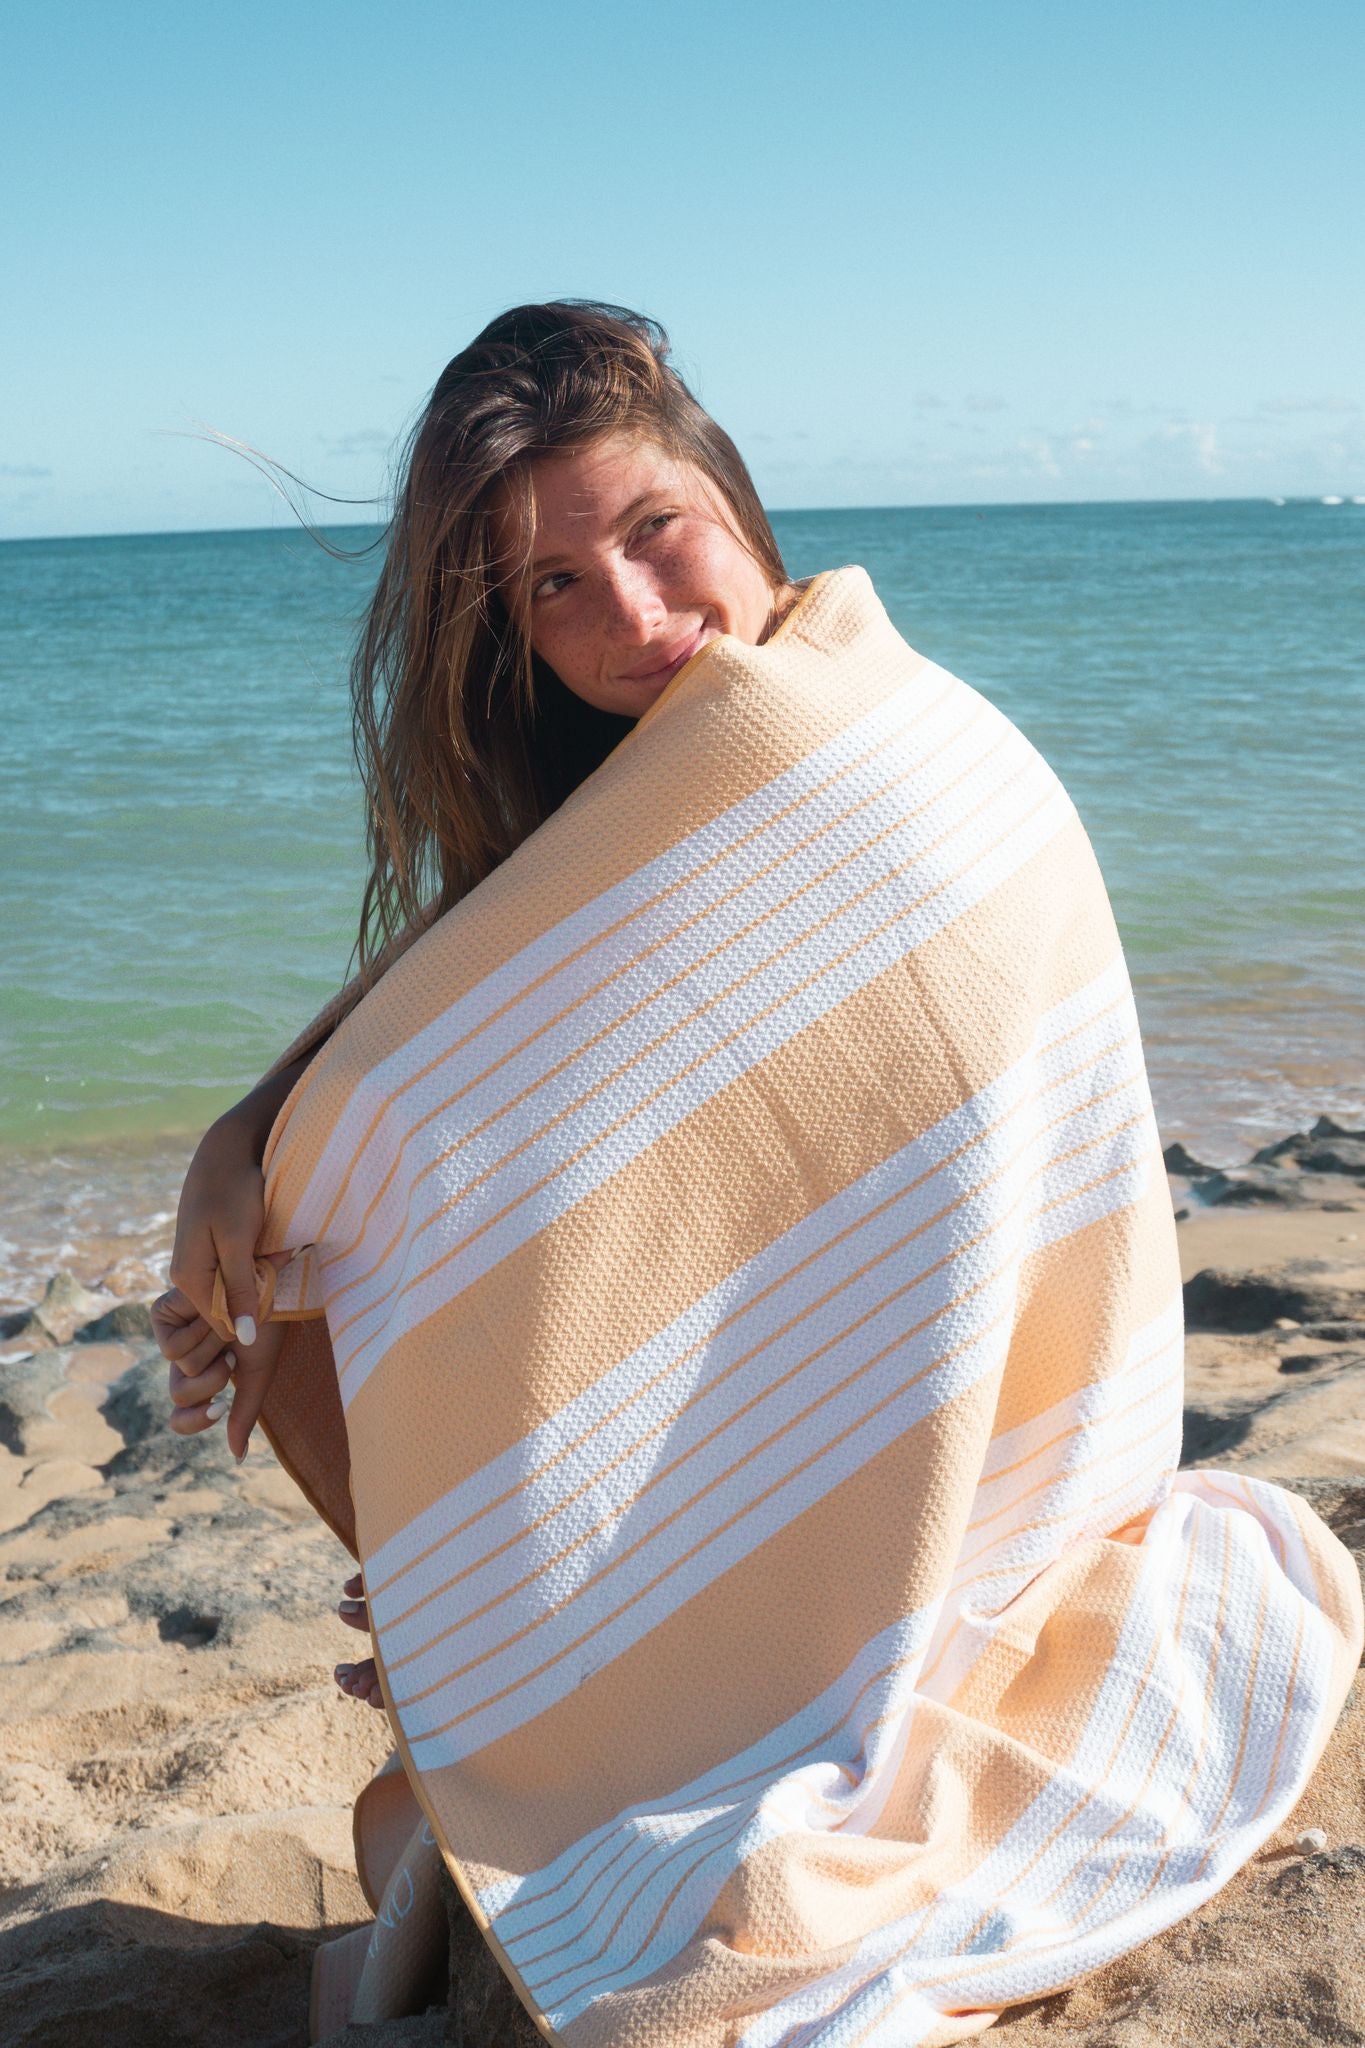 Sahara Sun Sand Free Towel - Extra Large Beach Blanket 